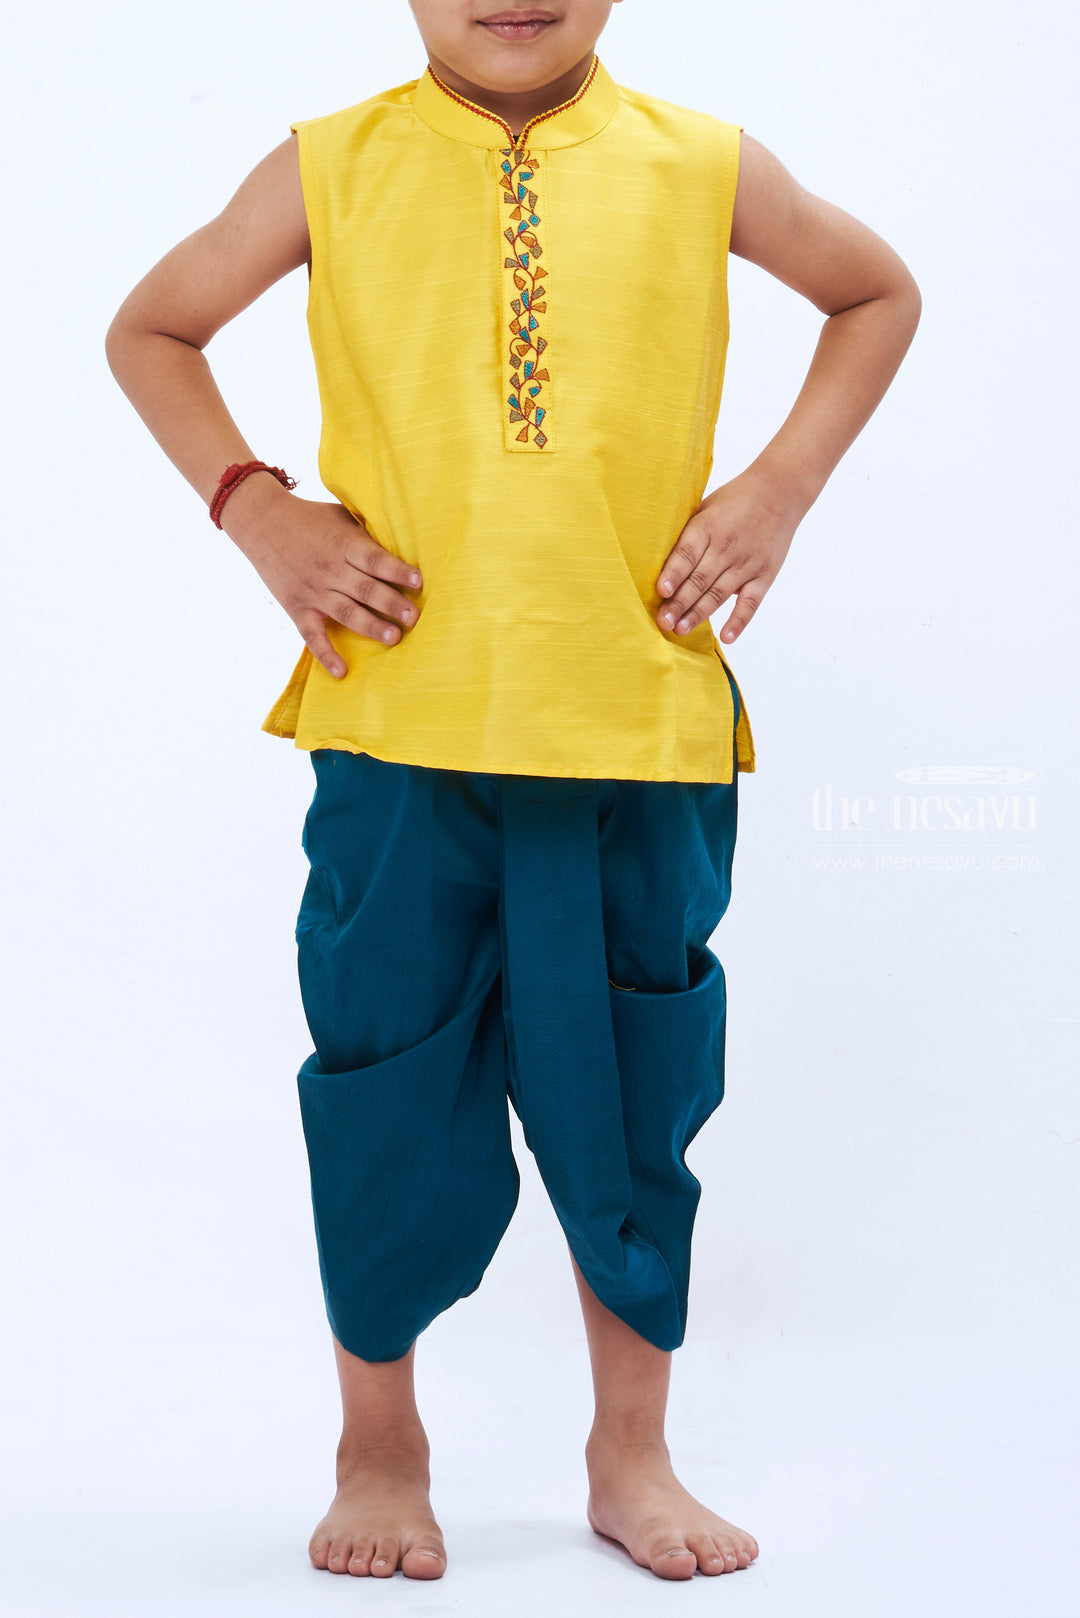 The Nesavu Boys Dothi Set Festive Yellow Dhoti Set with Traditional Indian Kurta for Boys Nesavu Boys Festive Yellow Dhoti Kurta Set | Traditional Indian Boys Clothing | The Nesavu